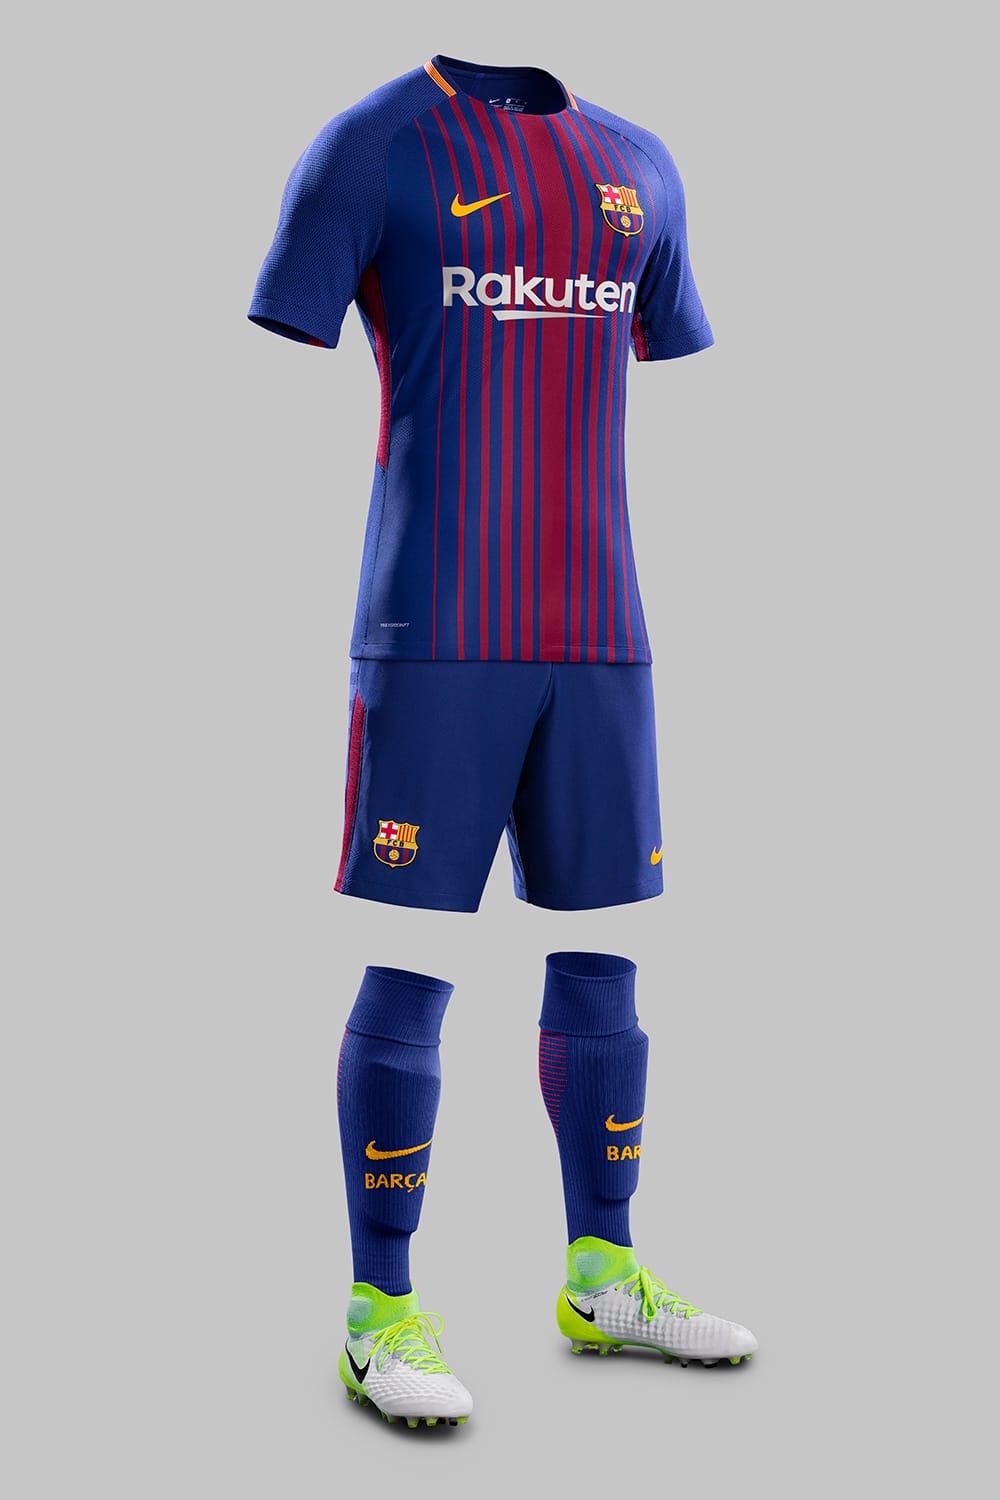 barcelona fc jersey 2018